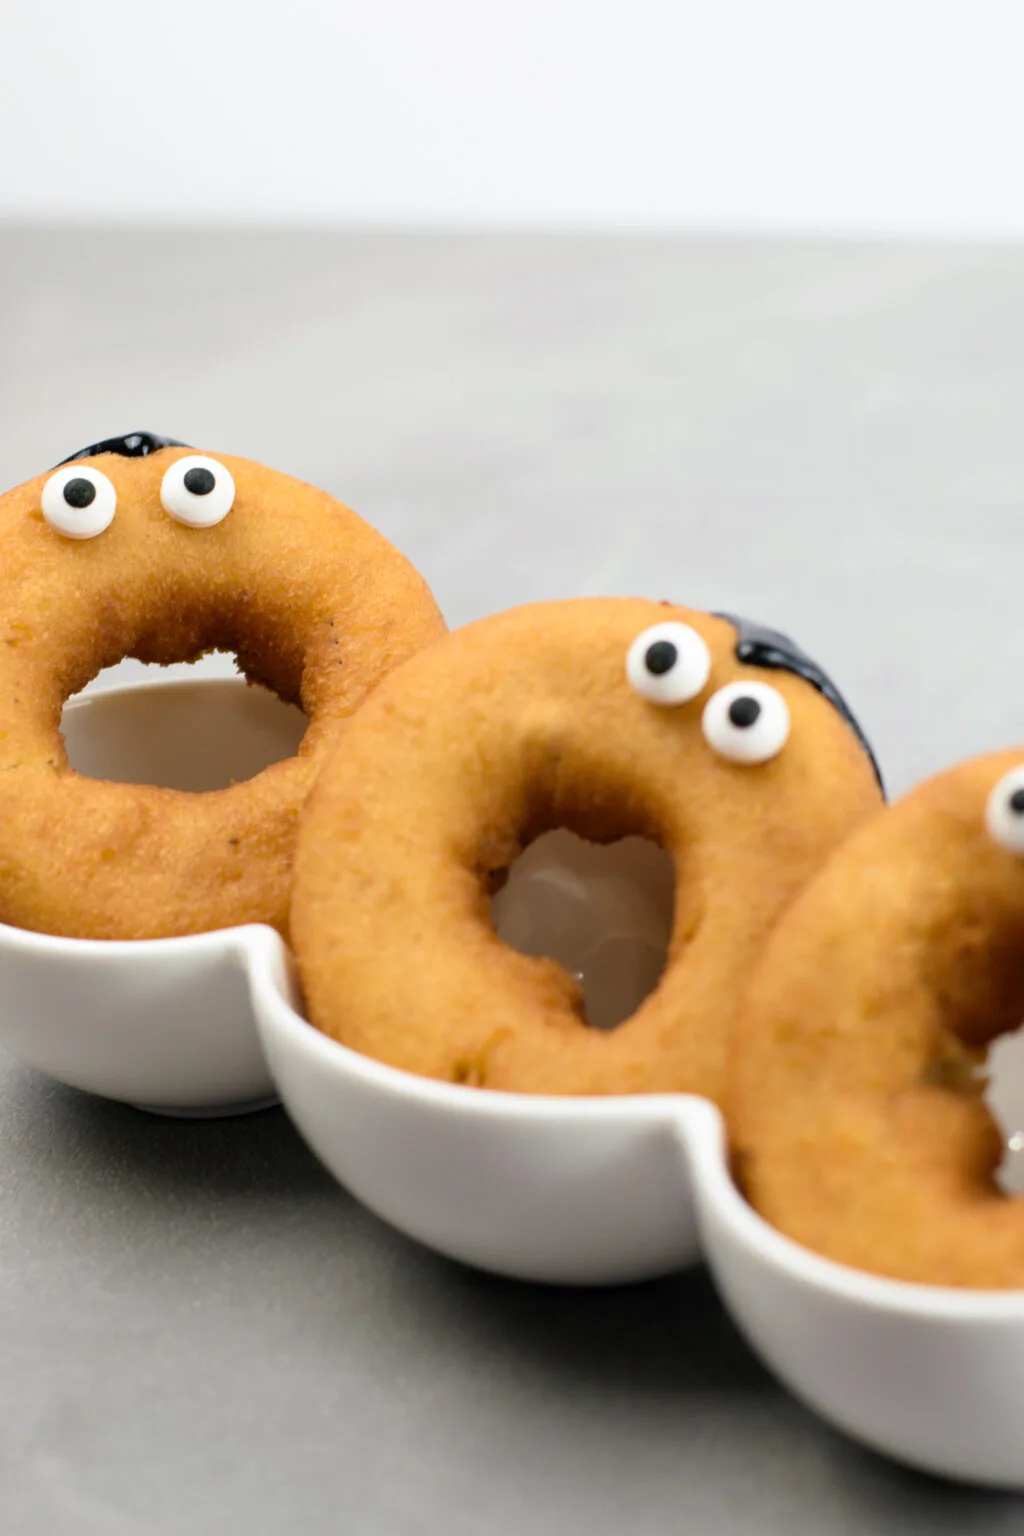 candy eyeballs on donuts to look like vampire eyes